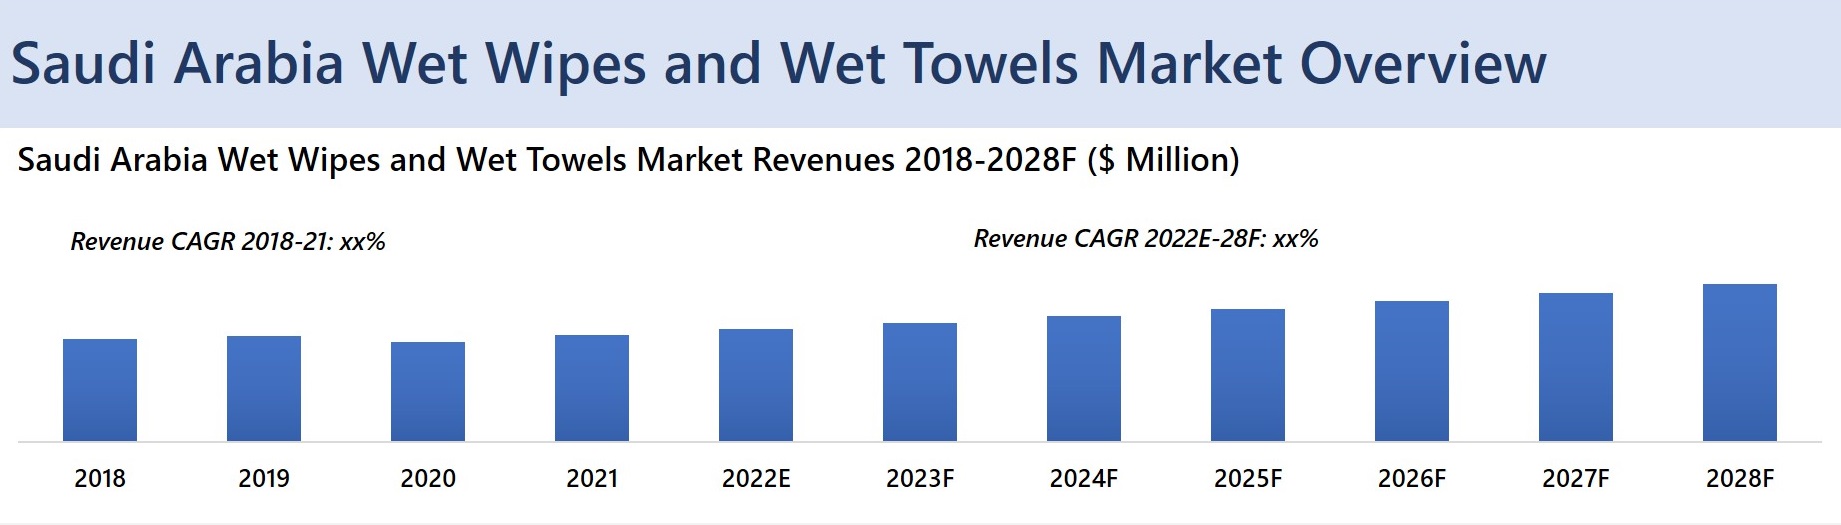 Saudi Arabia Wet Wipes and Towels Market